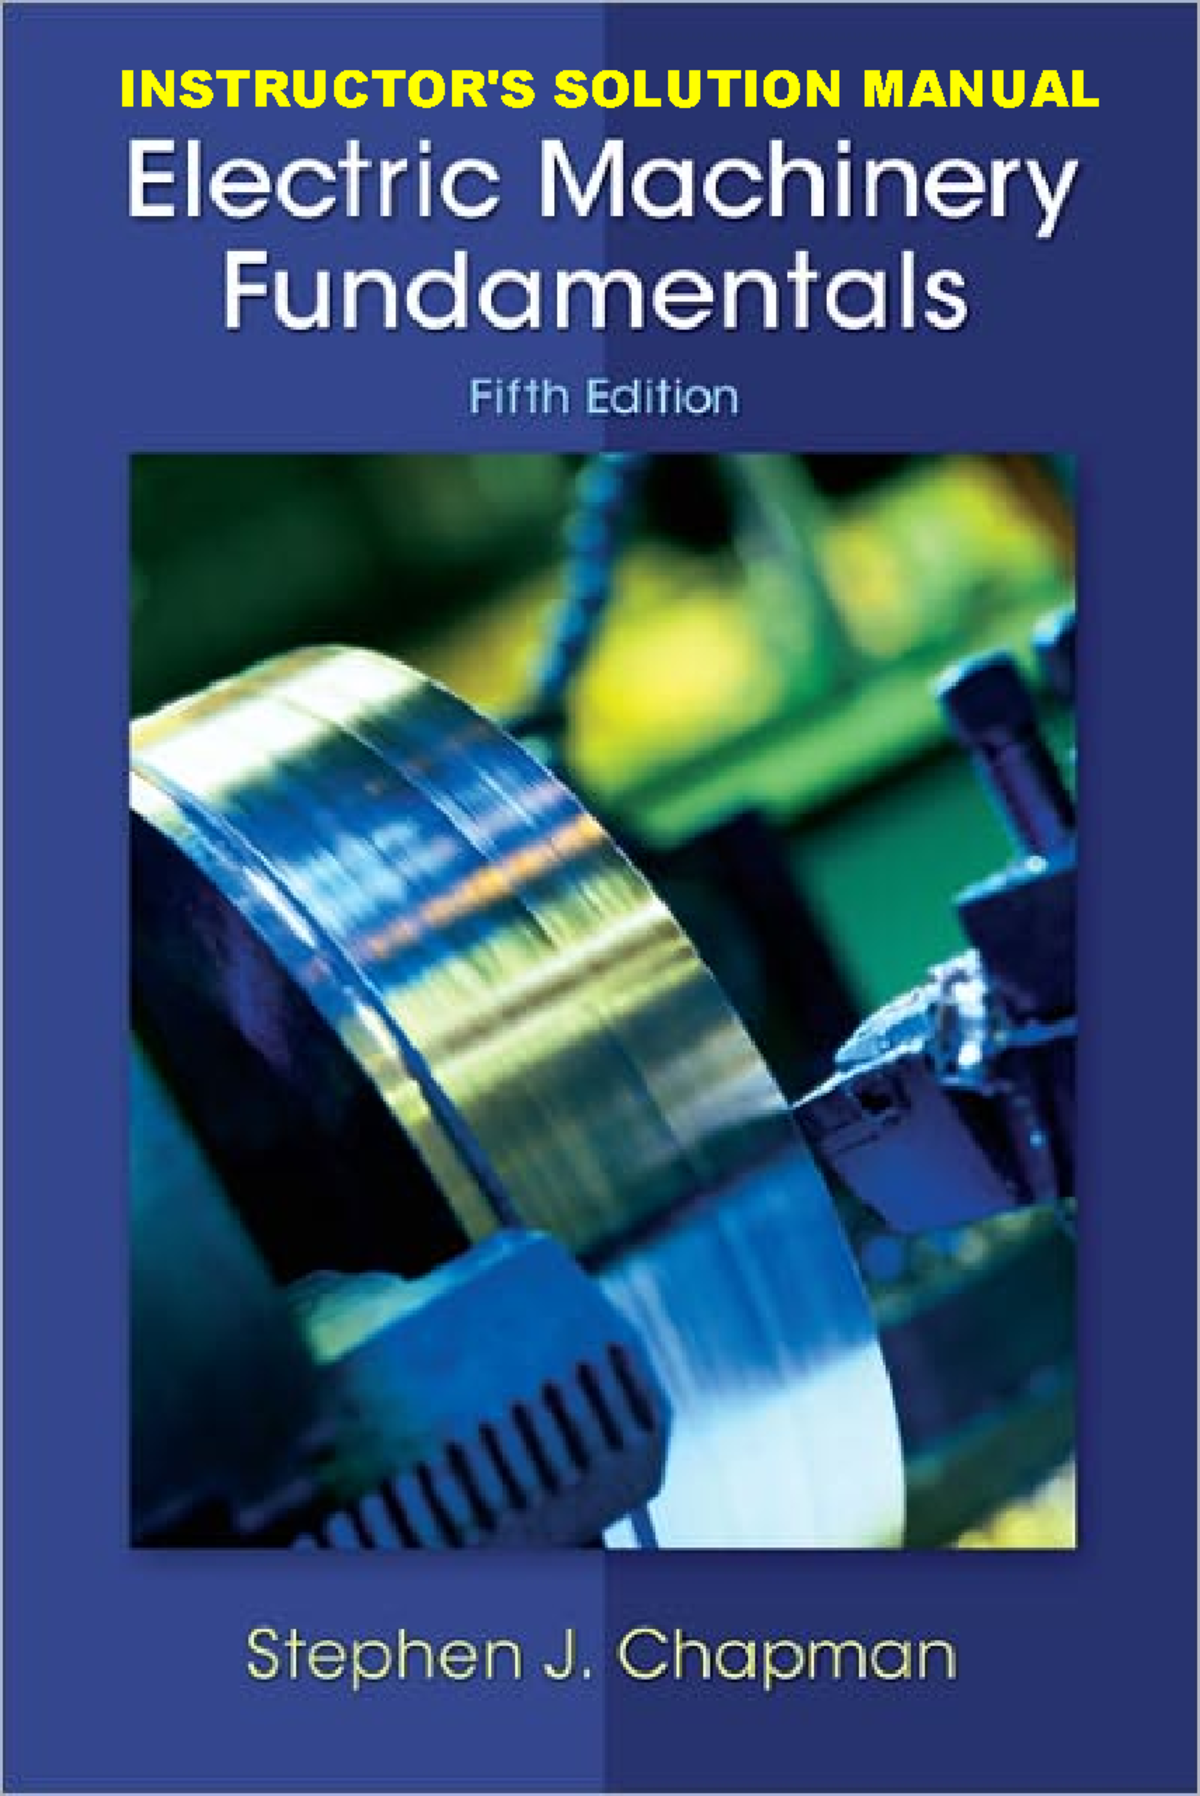 Electric Machinery Fundamentals - 5th Ed (Chapman)